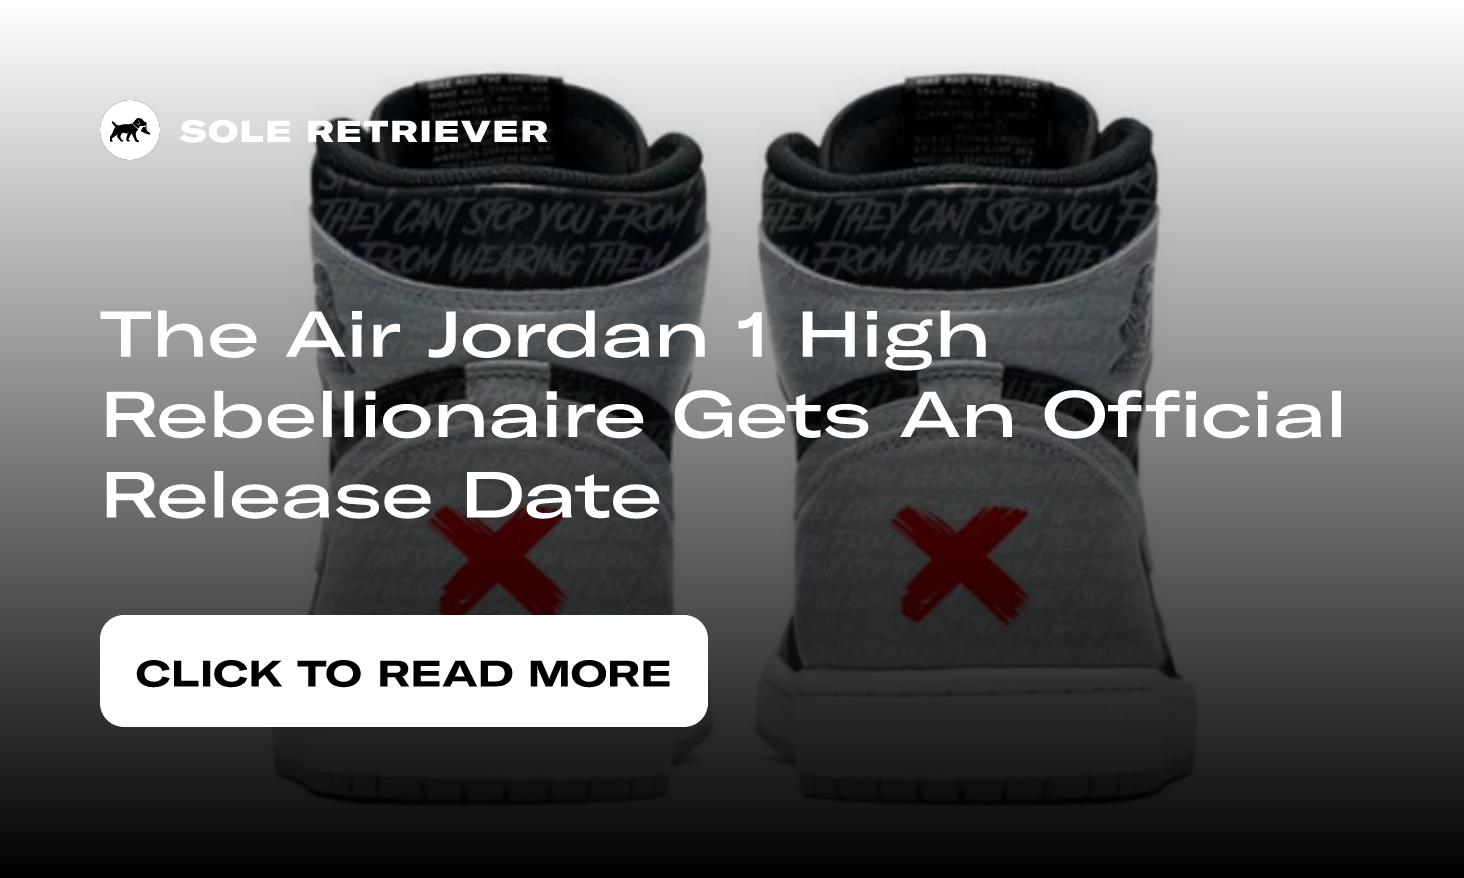 The Air Jordan 1 High Rebellionaire Gets An Official Release Date